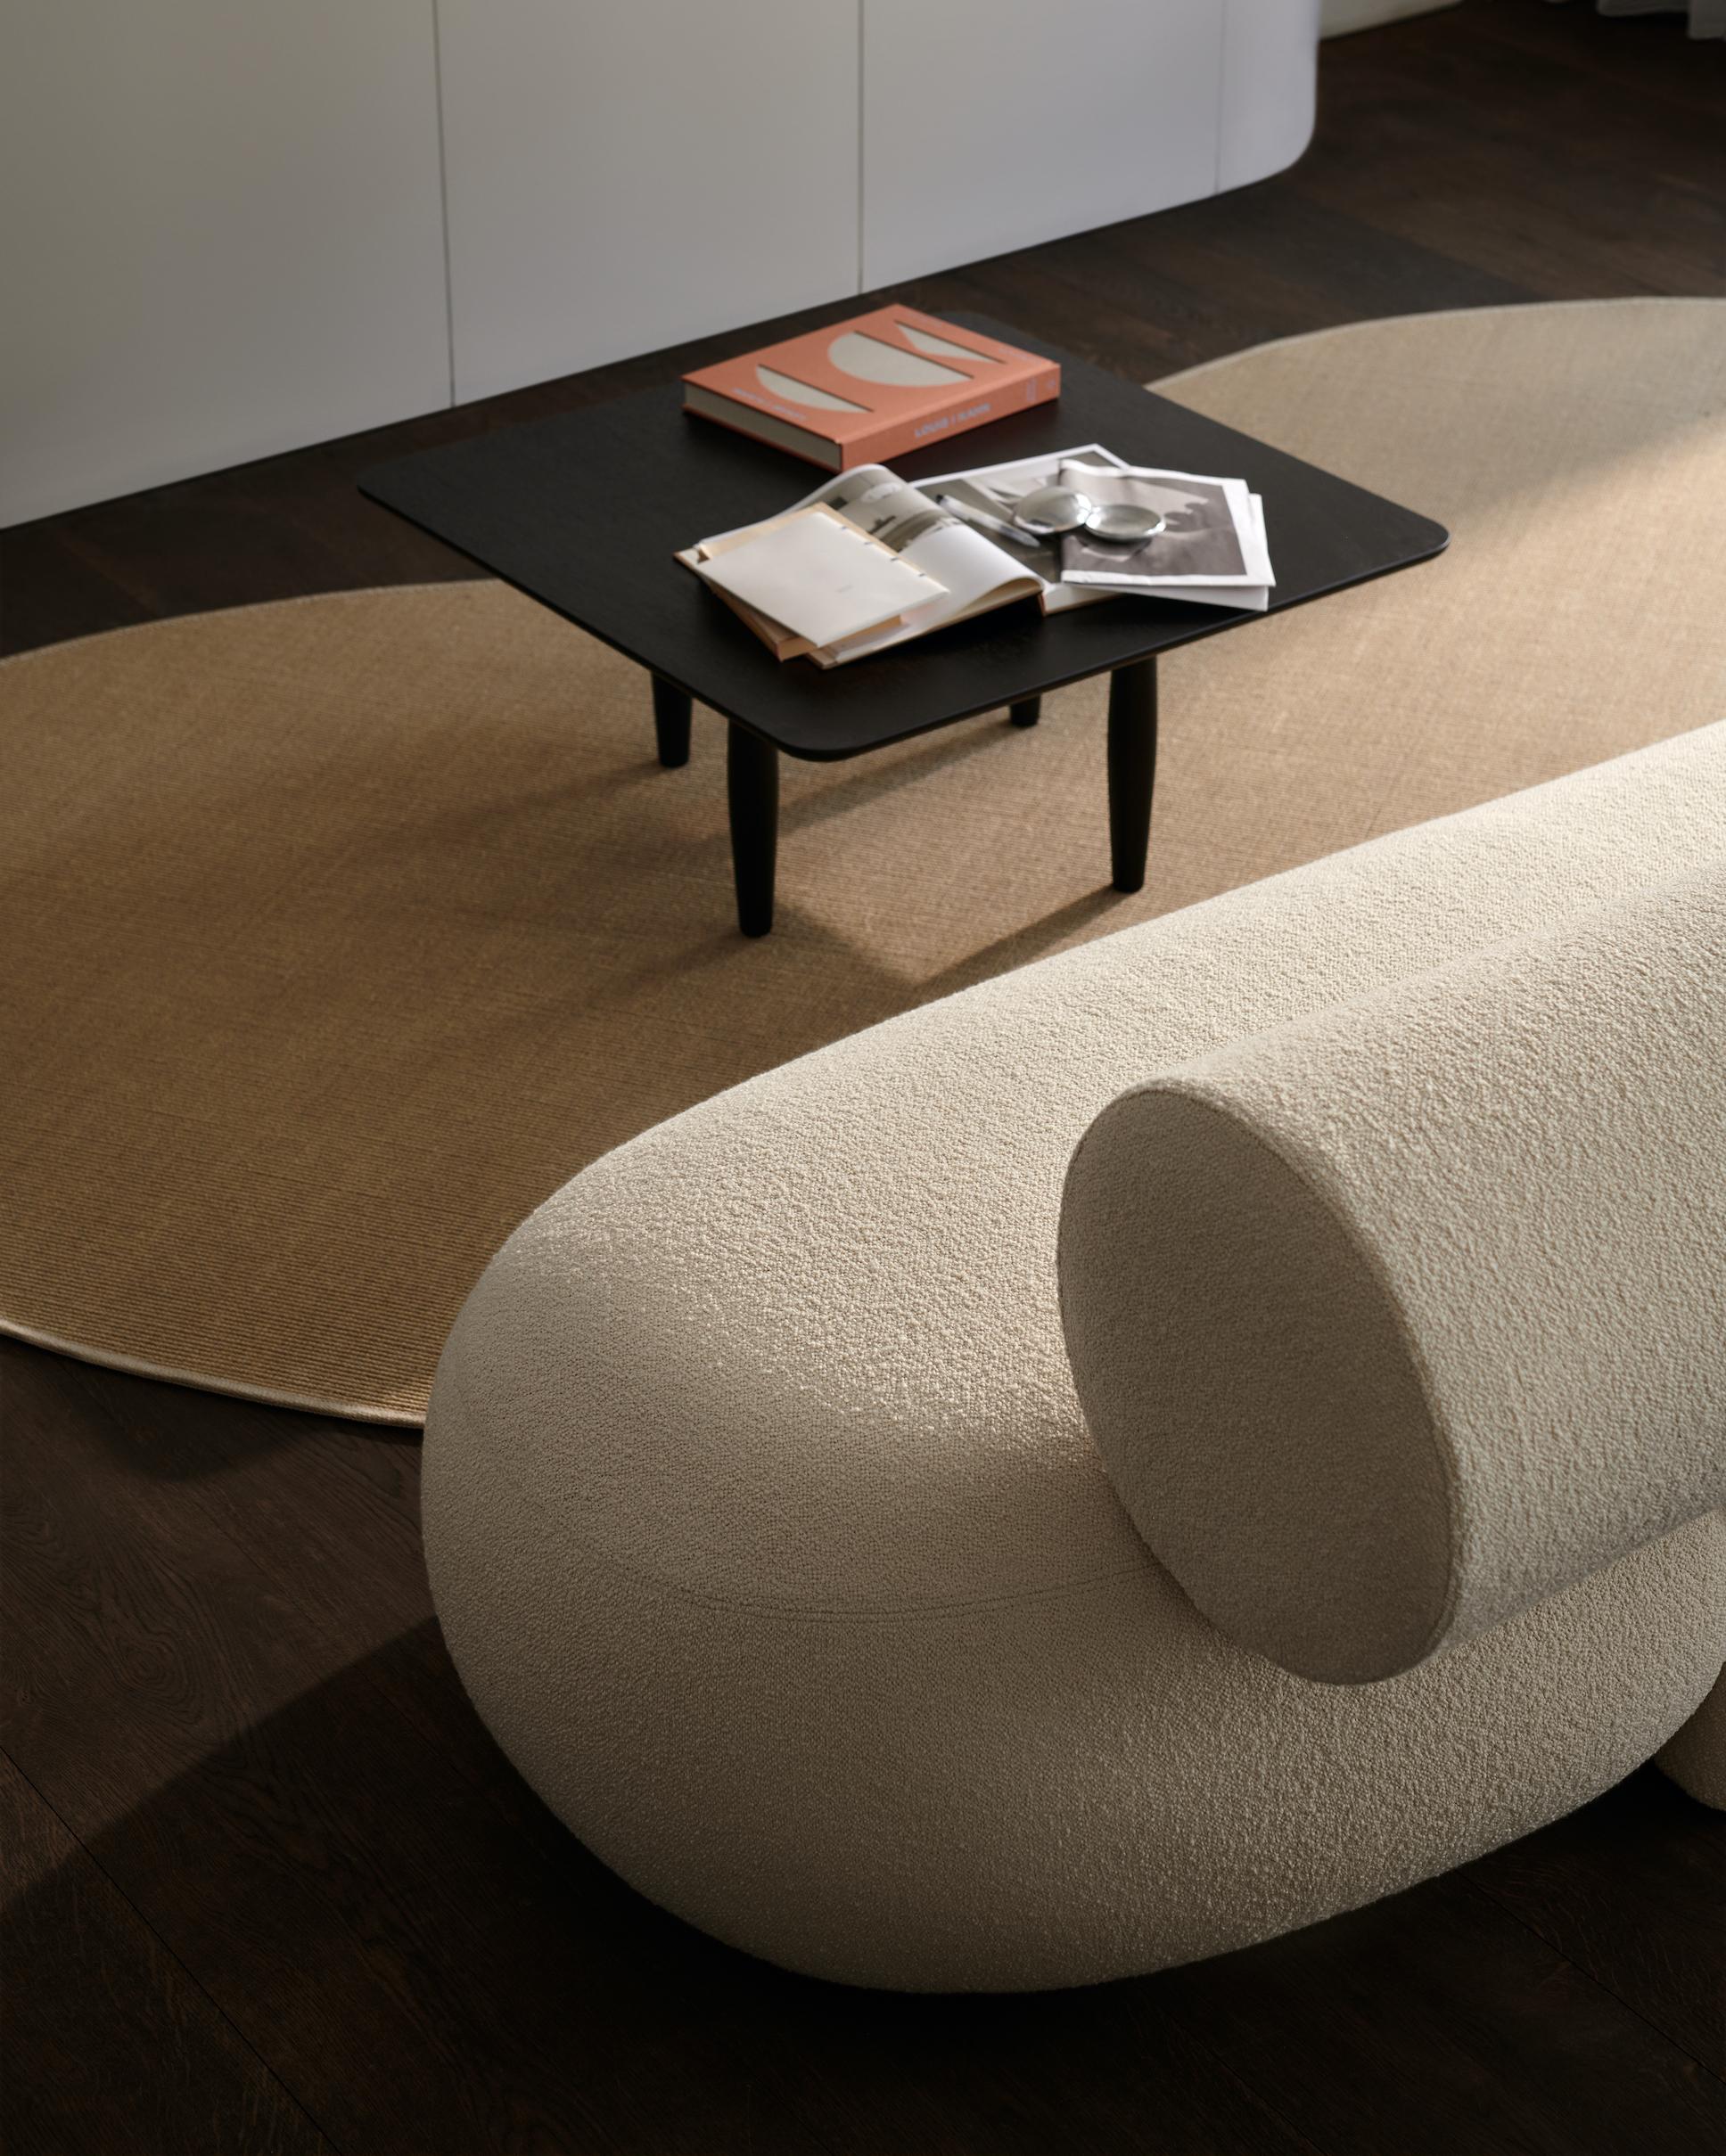 Danish 'Hippo' Upholstered Sofa by Norr11, Zero, Cream For Sale